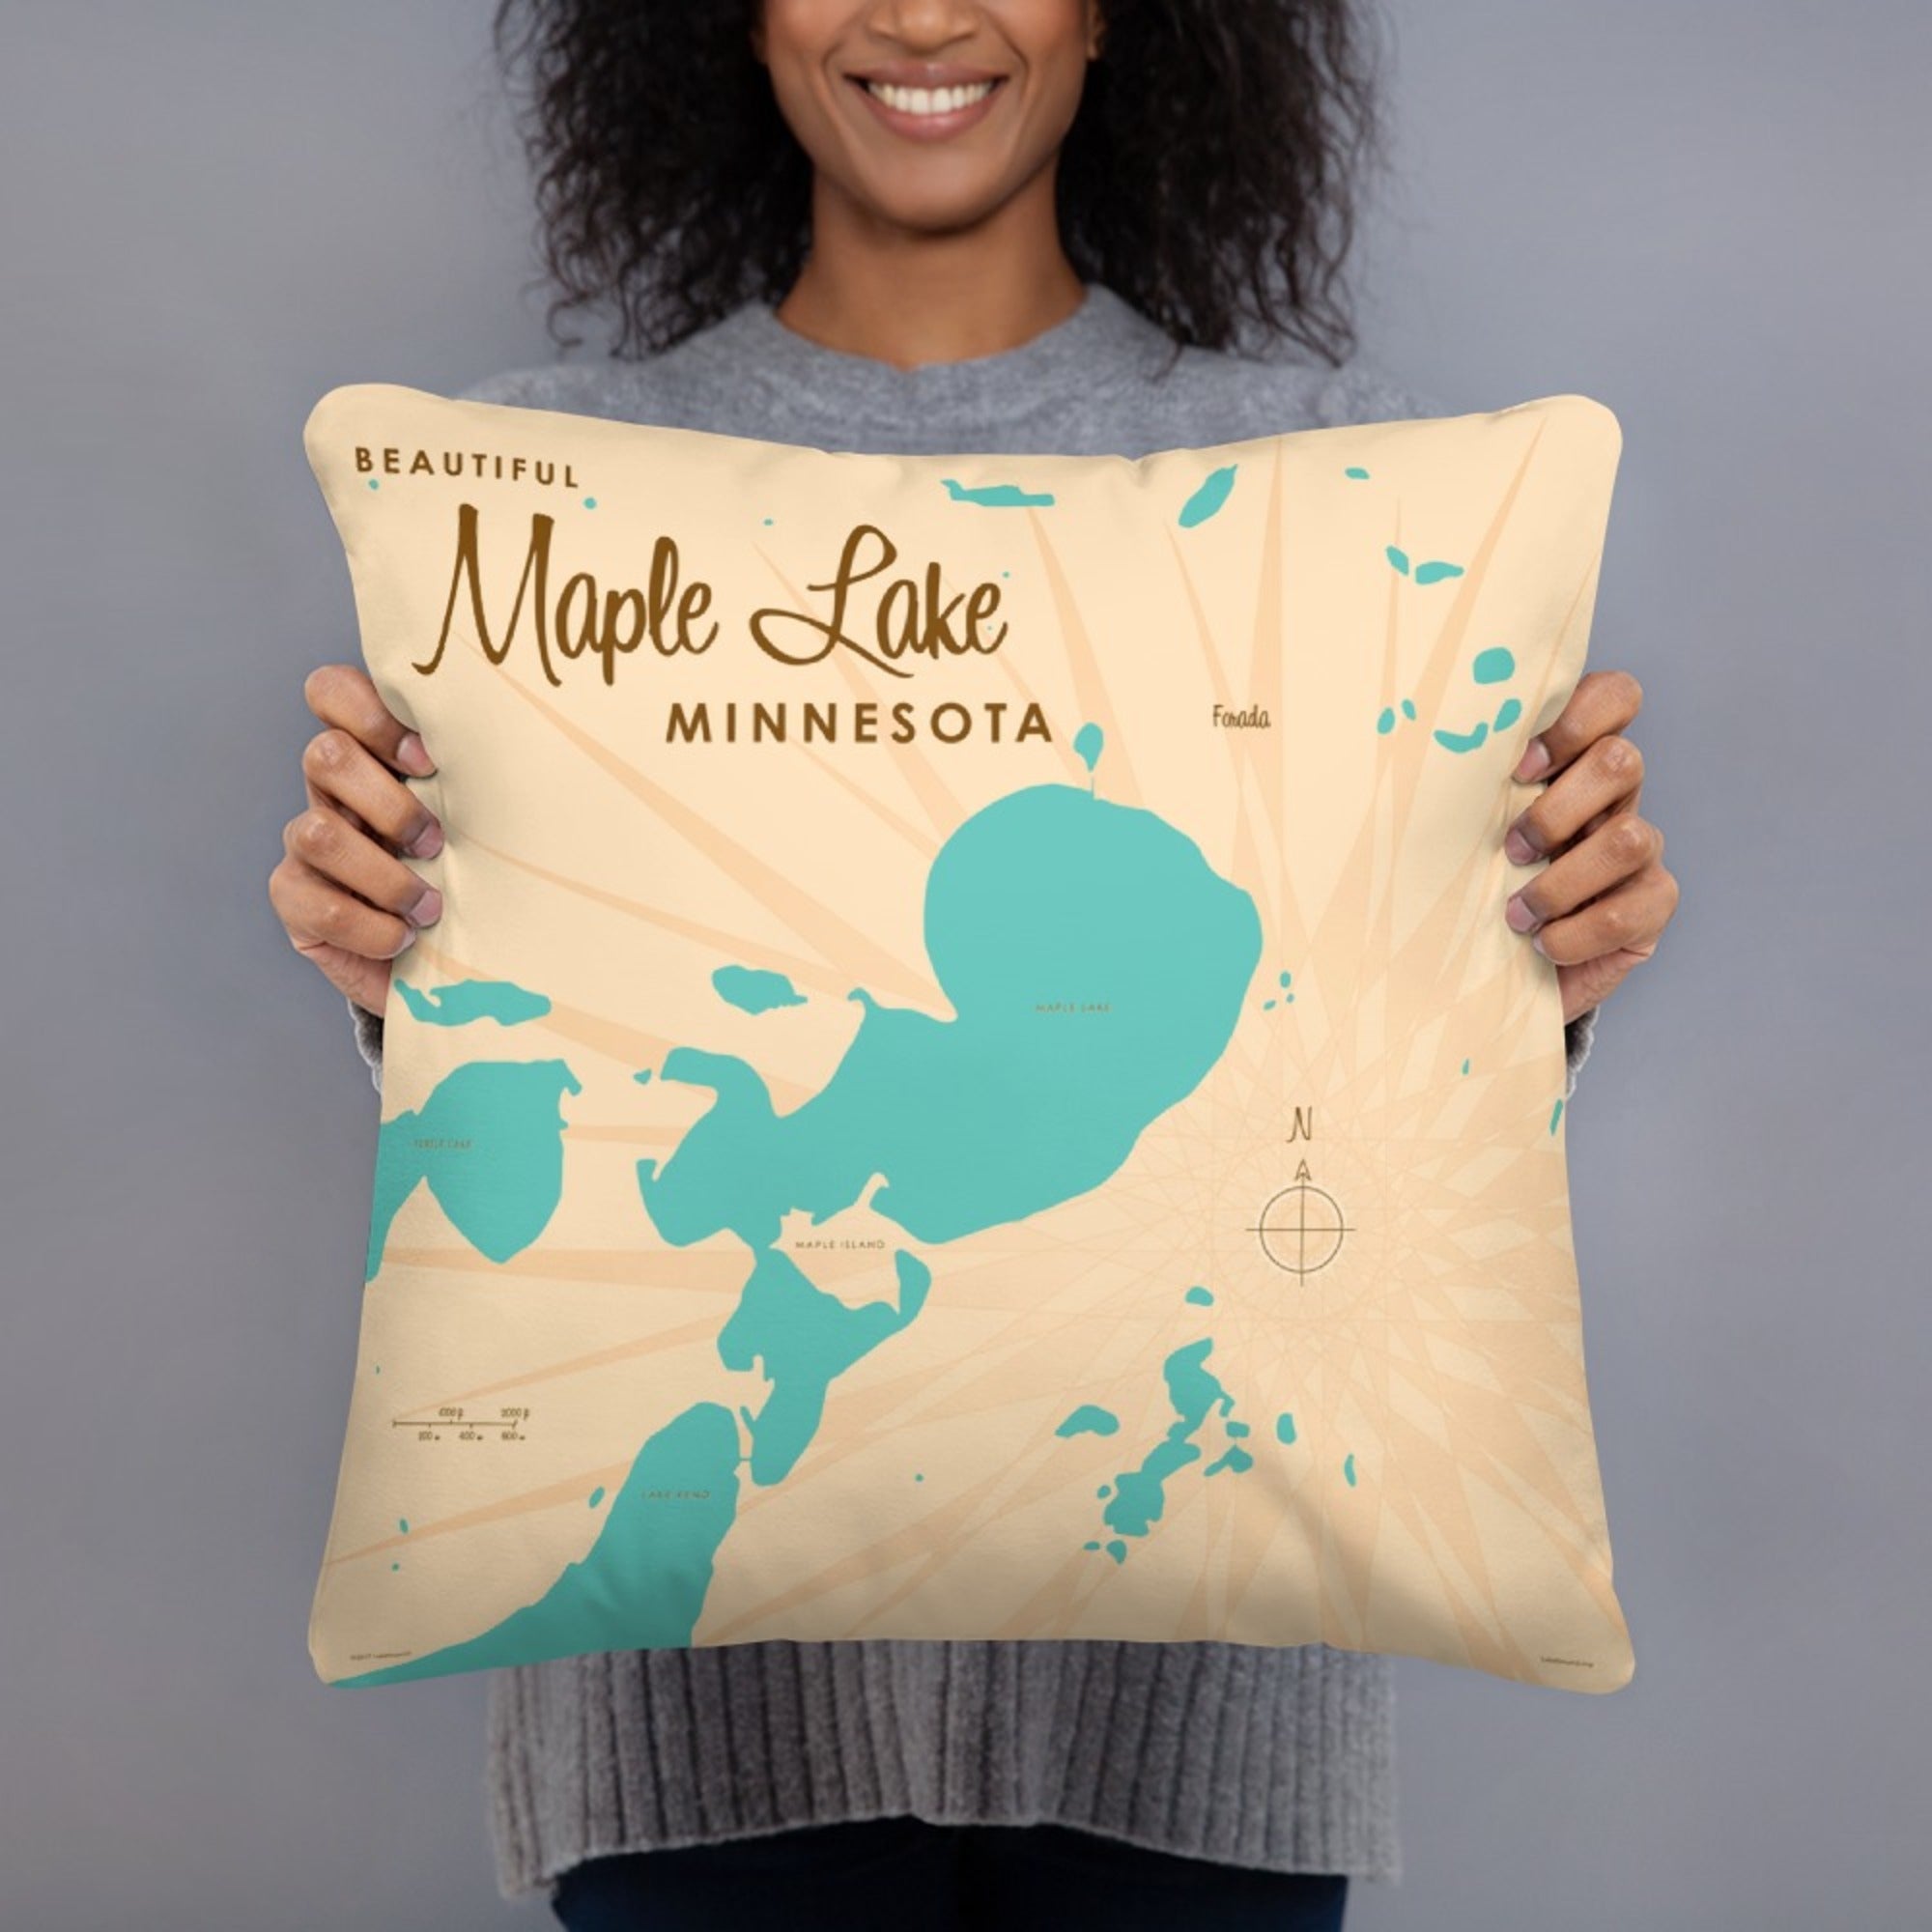 Maple Lake Minnesota Pillow